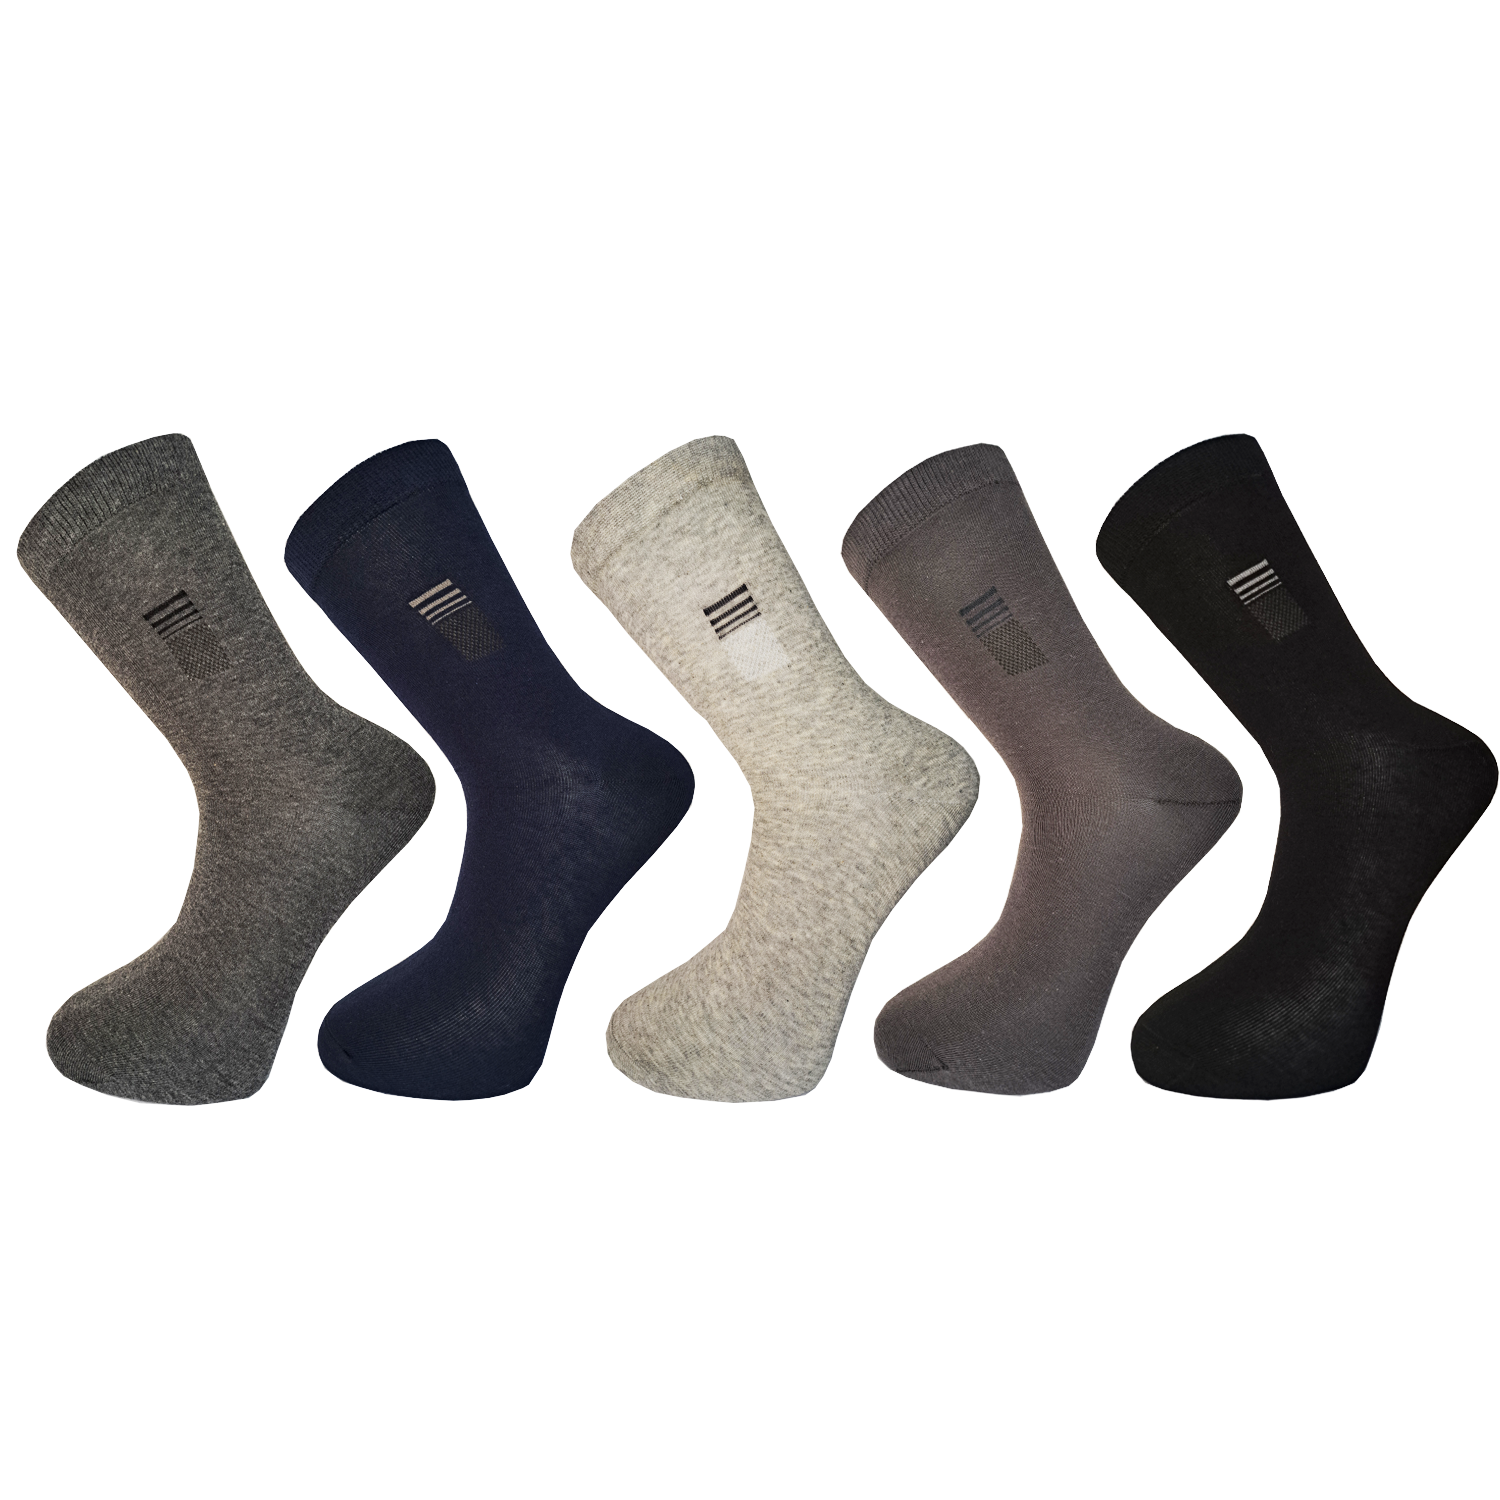 Pánské ponožky Aura.Via - FL1922, mix barev Barva: Mix barev, Velikost: 39-42